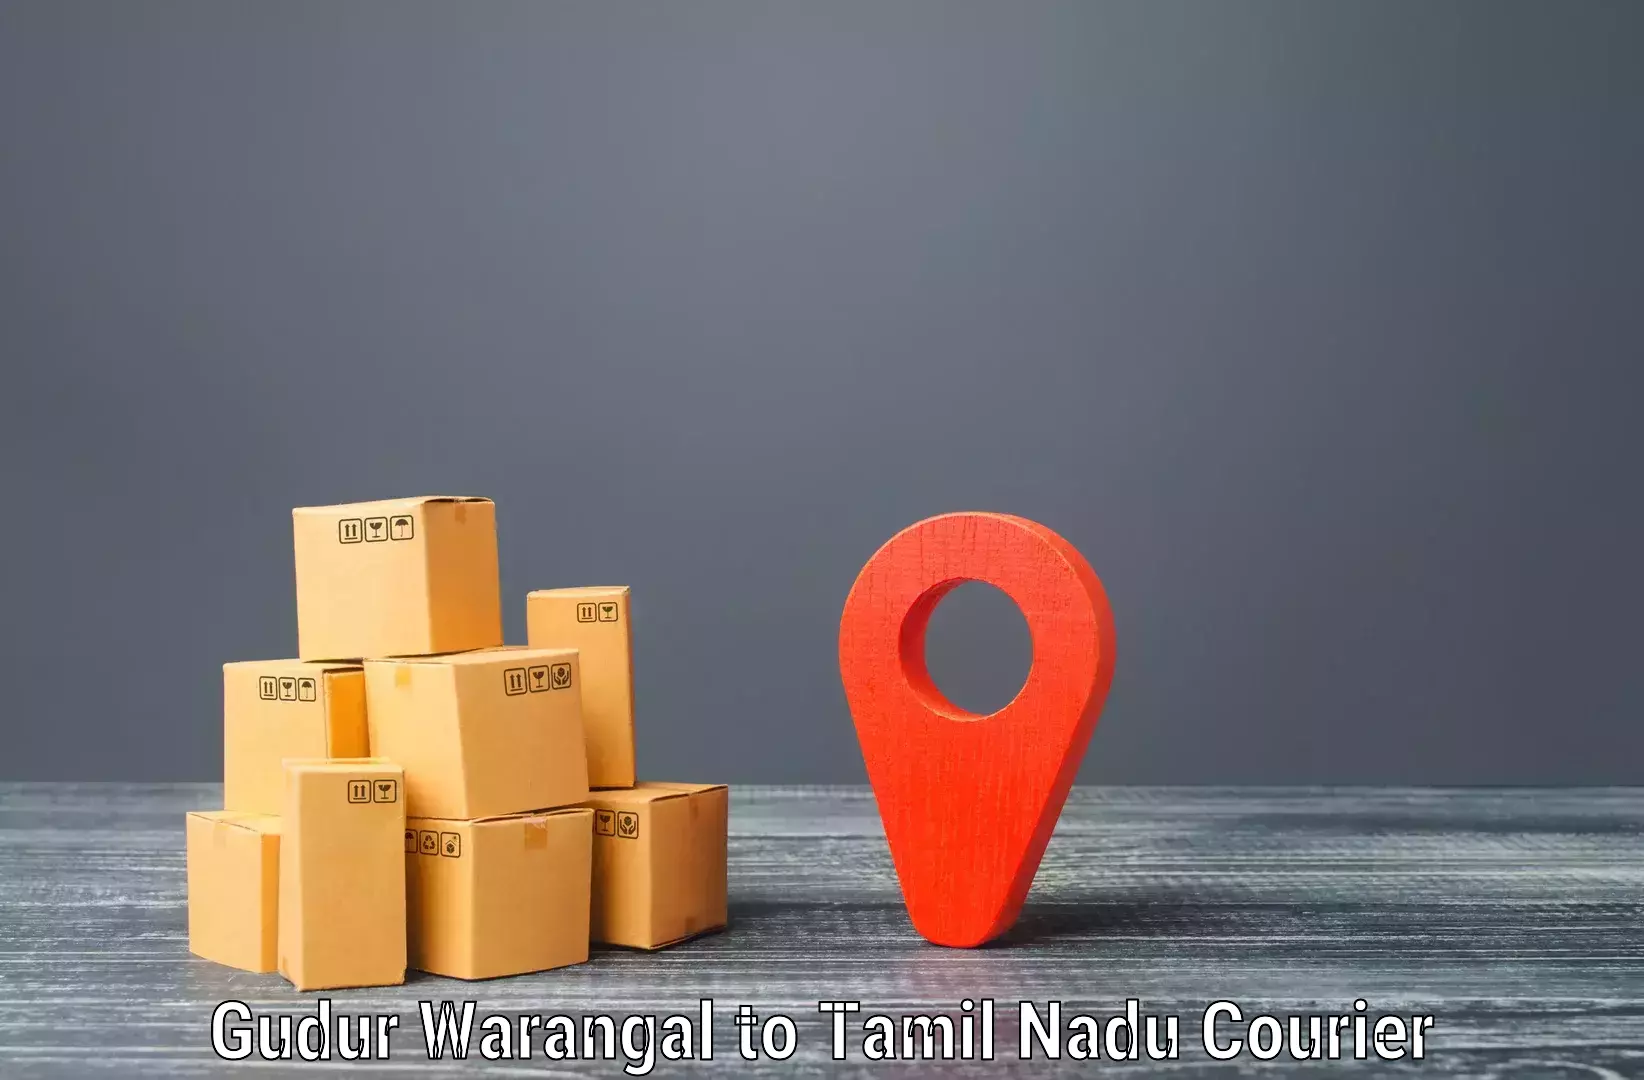 Express logistics providers Gudur Warangal to Kulithalai